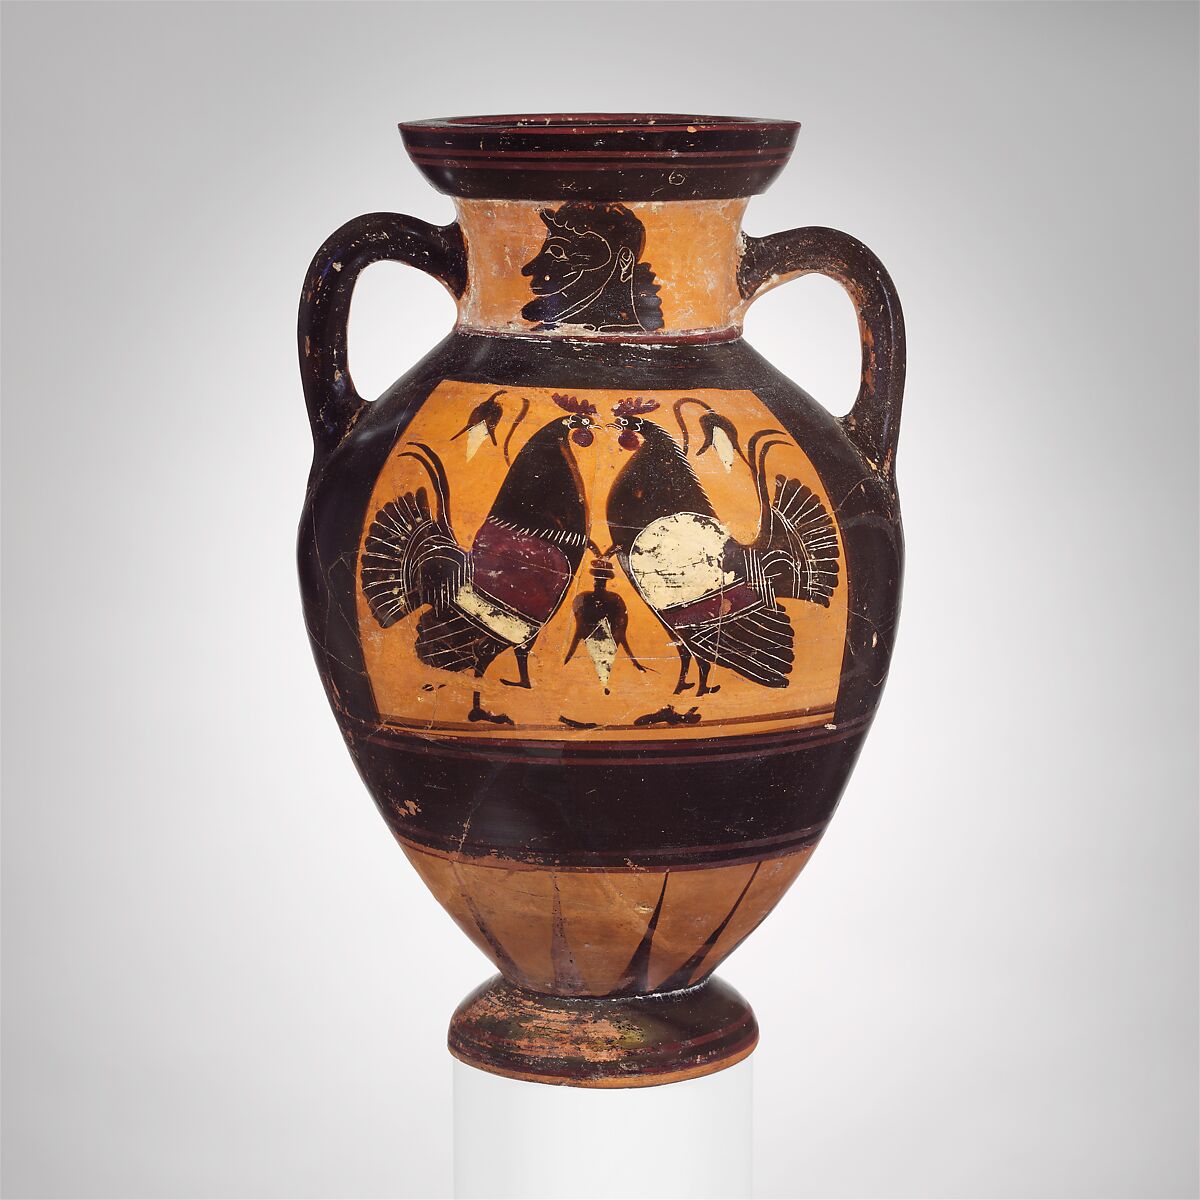 Terracotta neck-amphora (jar), Painter of London B 76, Terracotta, Greek, Attic